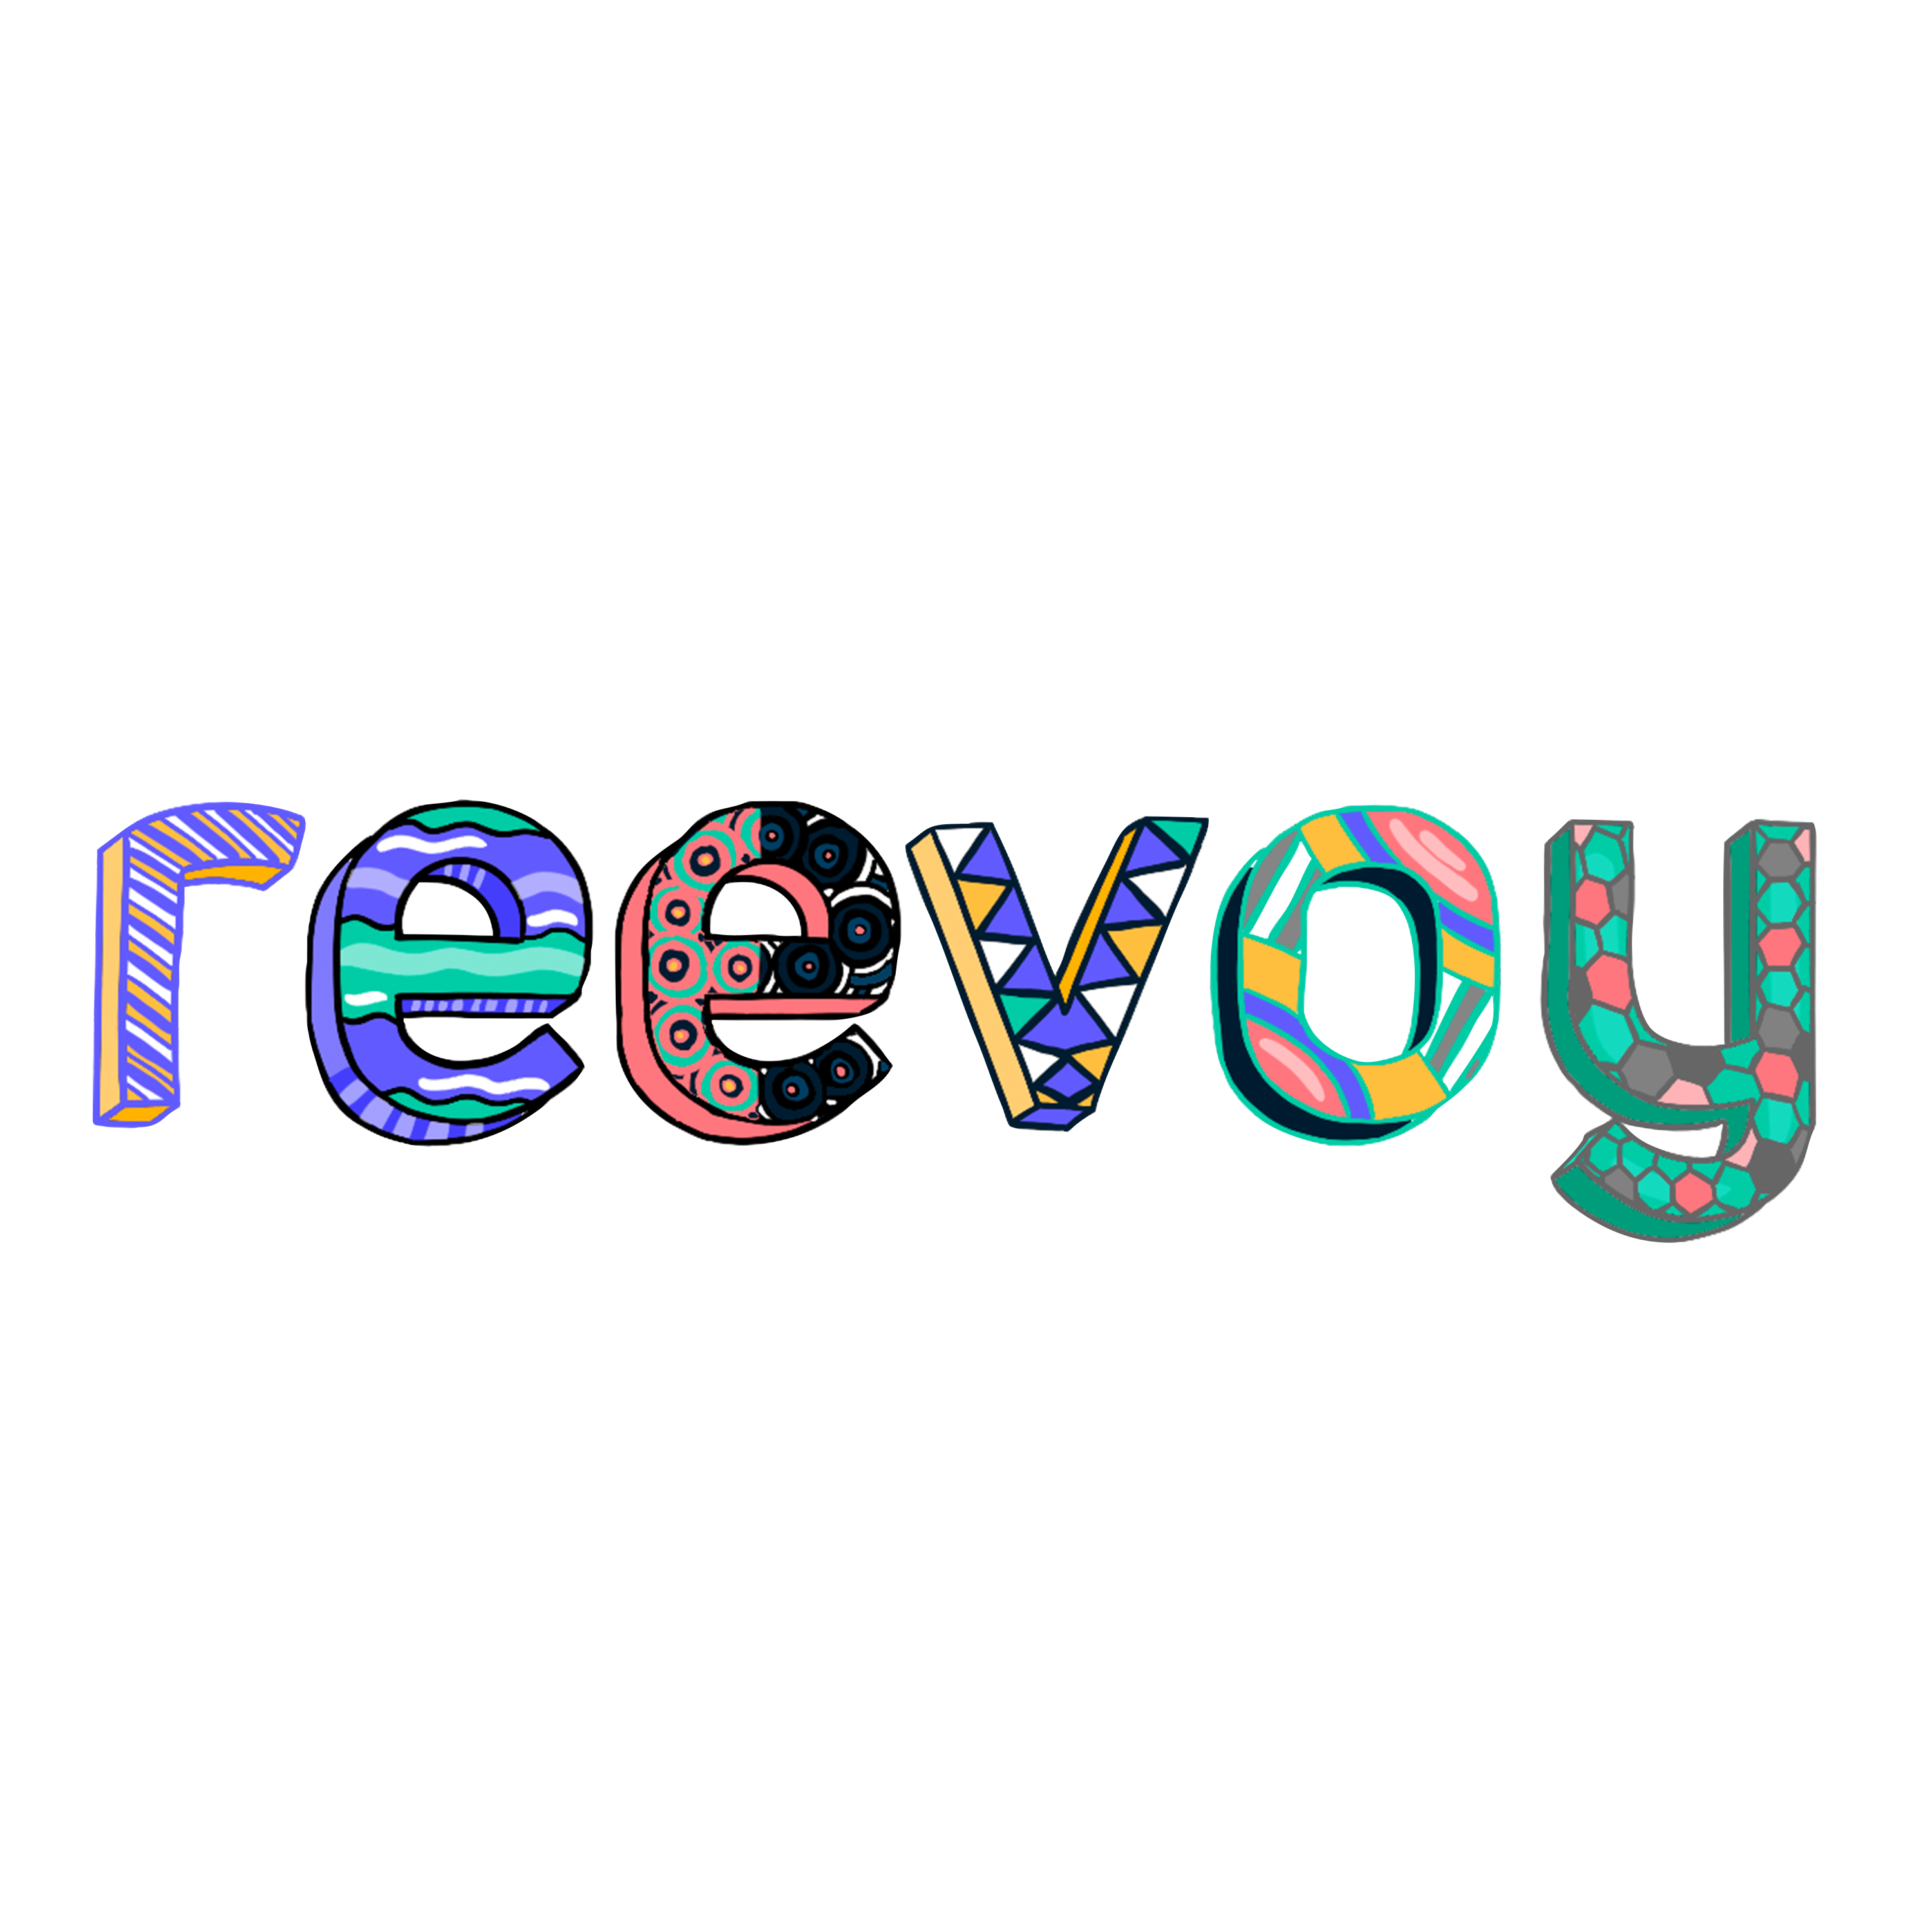 Reevoy Limited